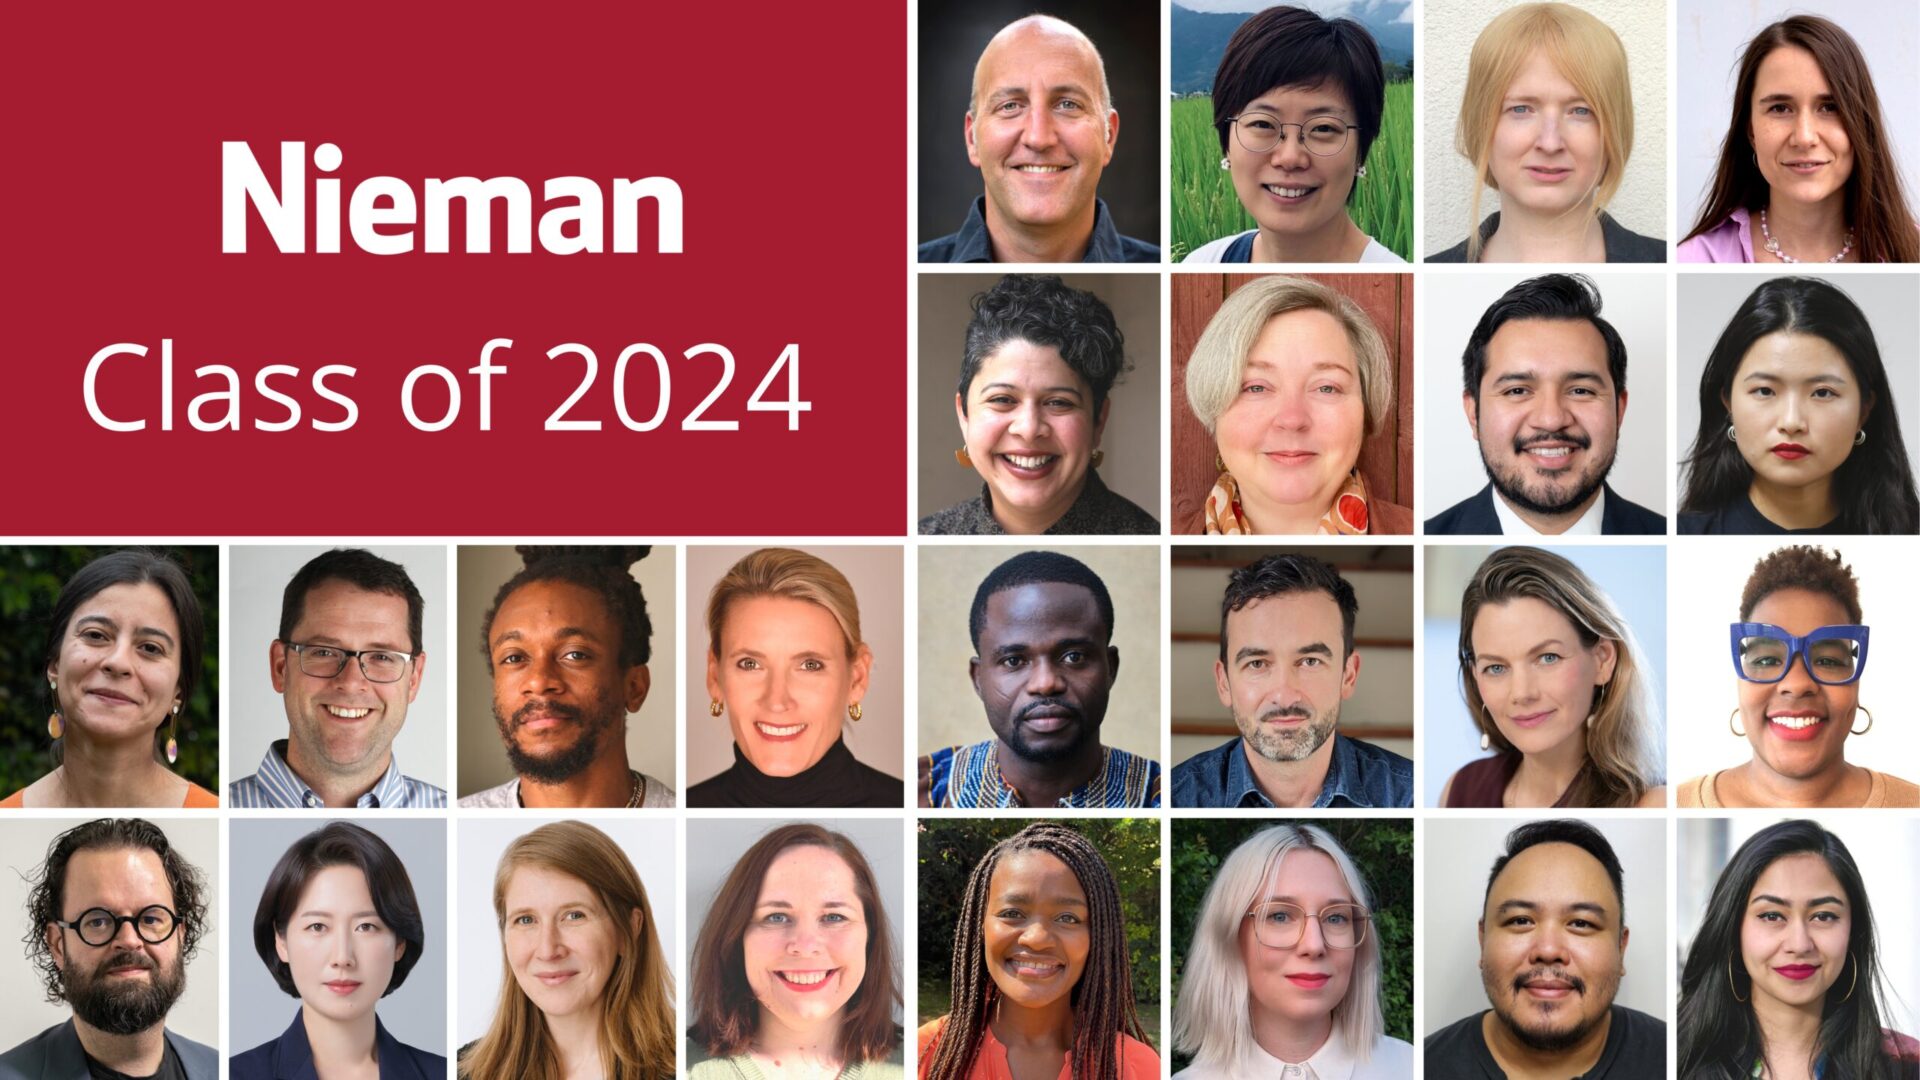 The 24 members of the Nieman class of 2024